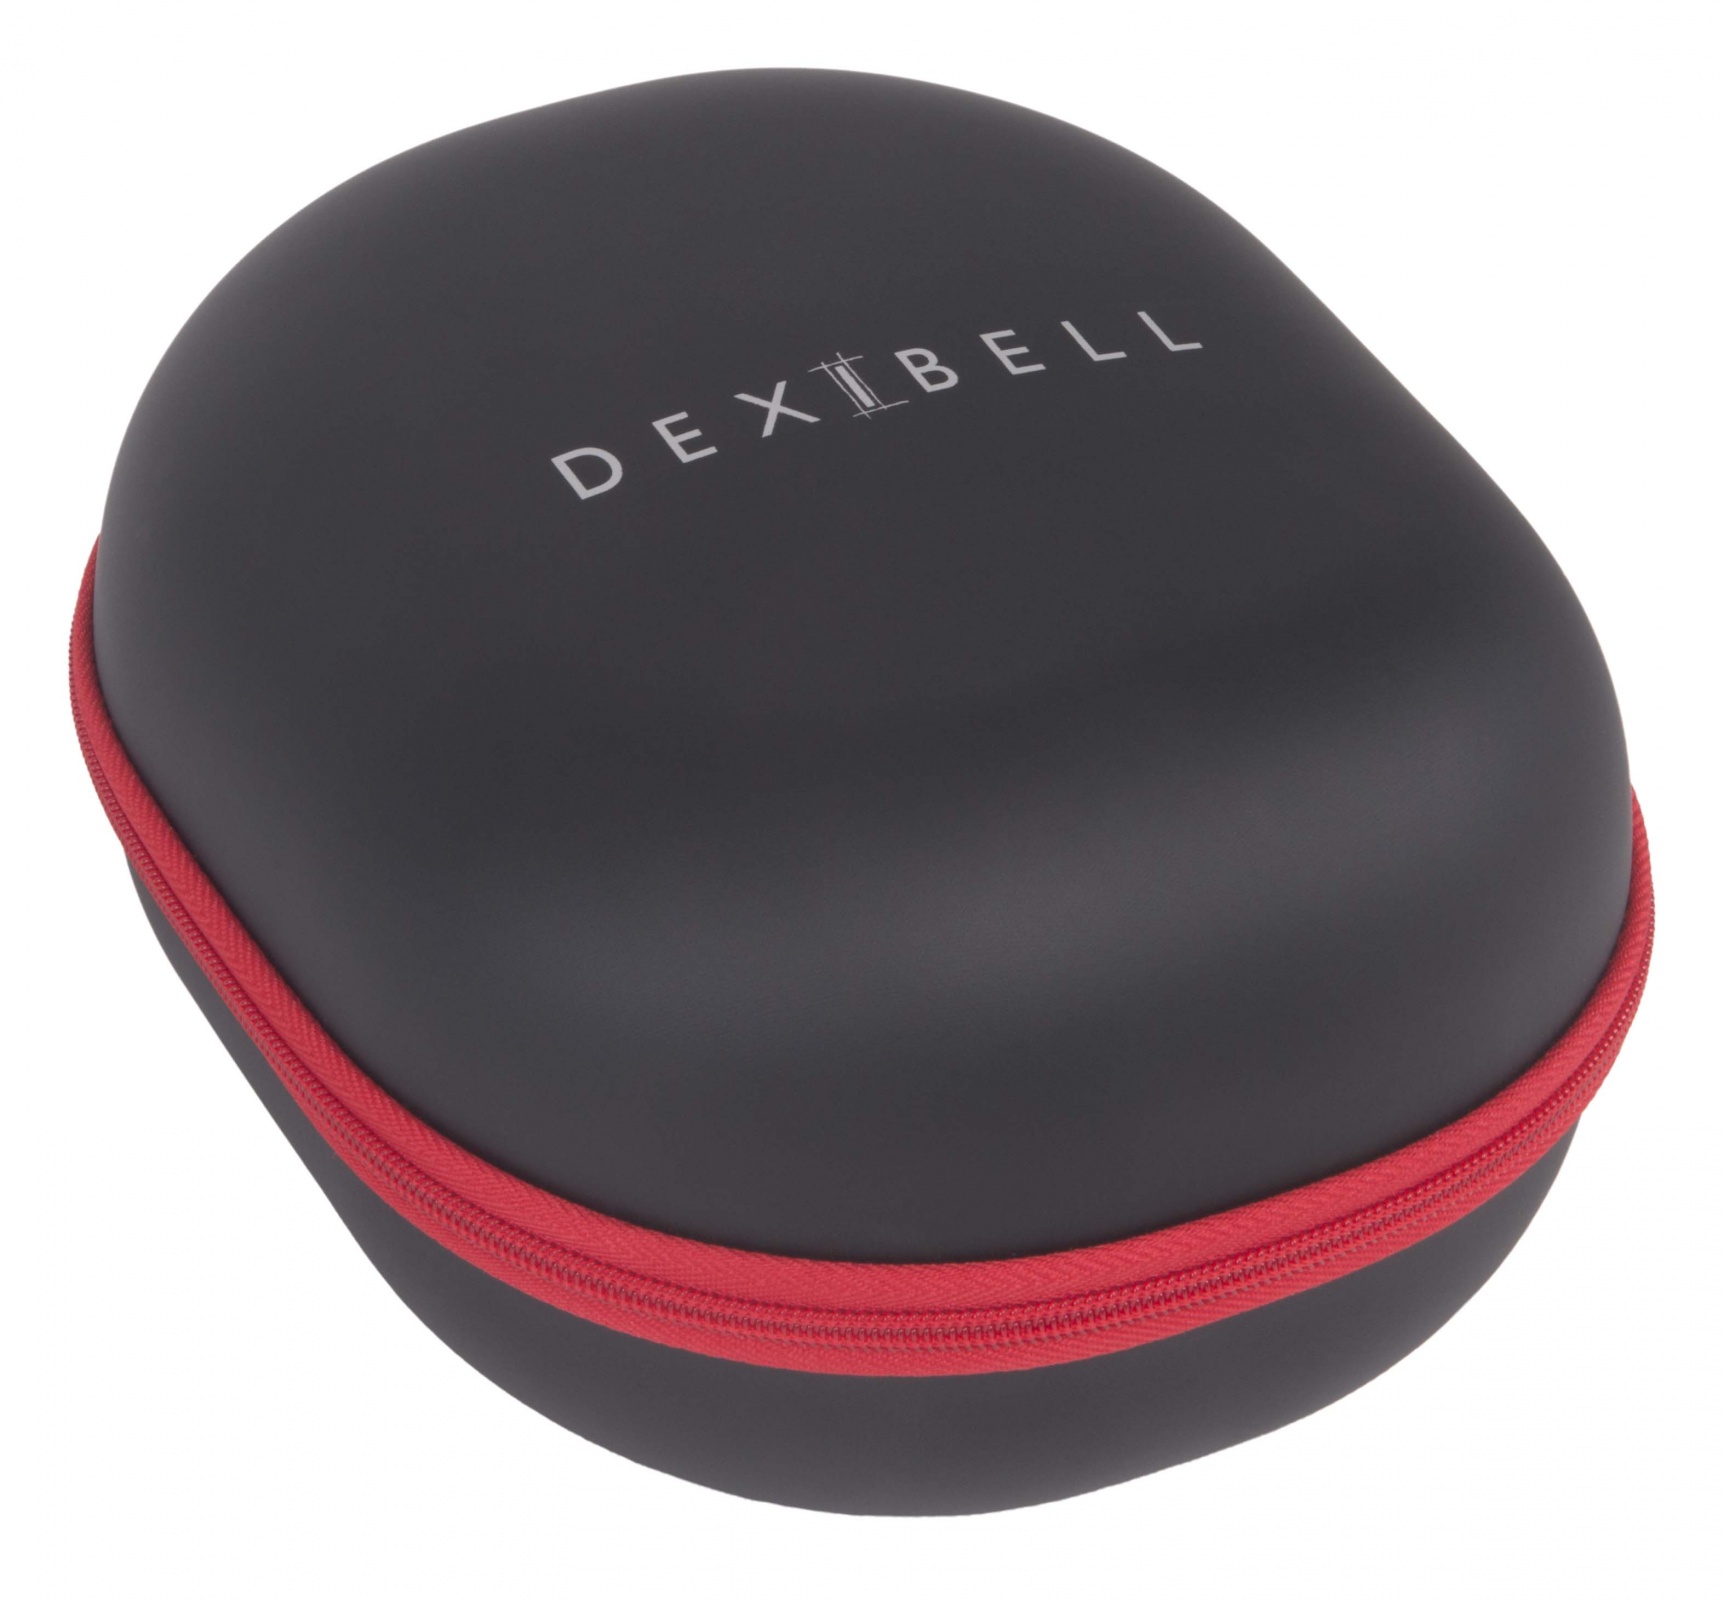 Dexibell Dxhf7 - Closed headset - Variation 2